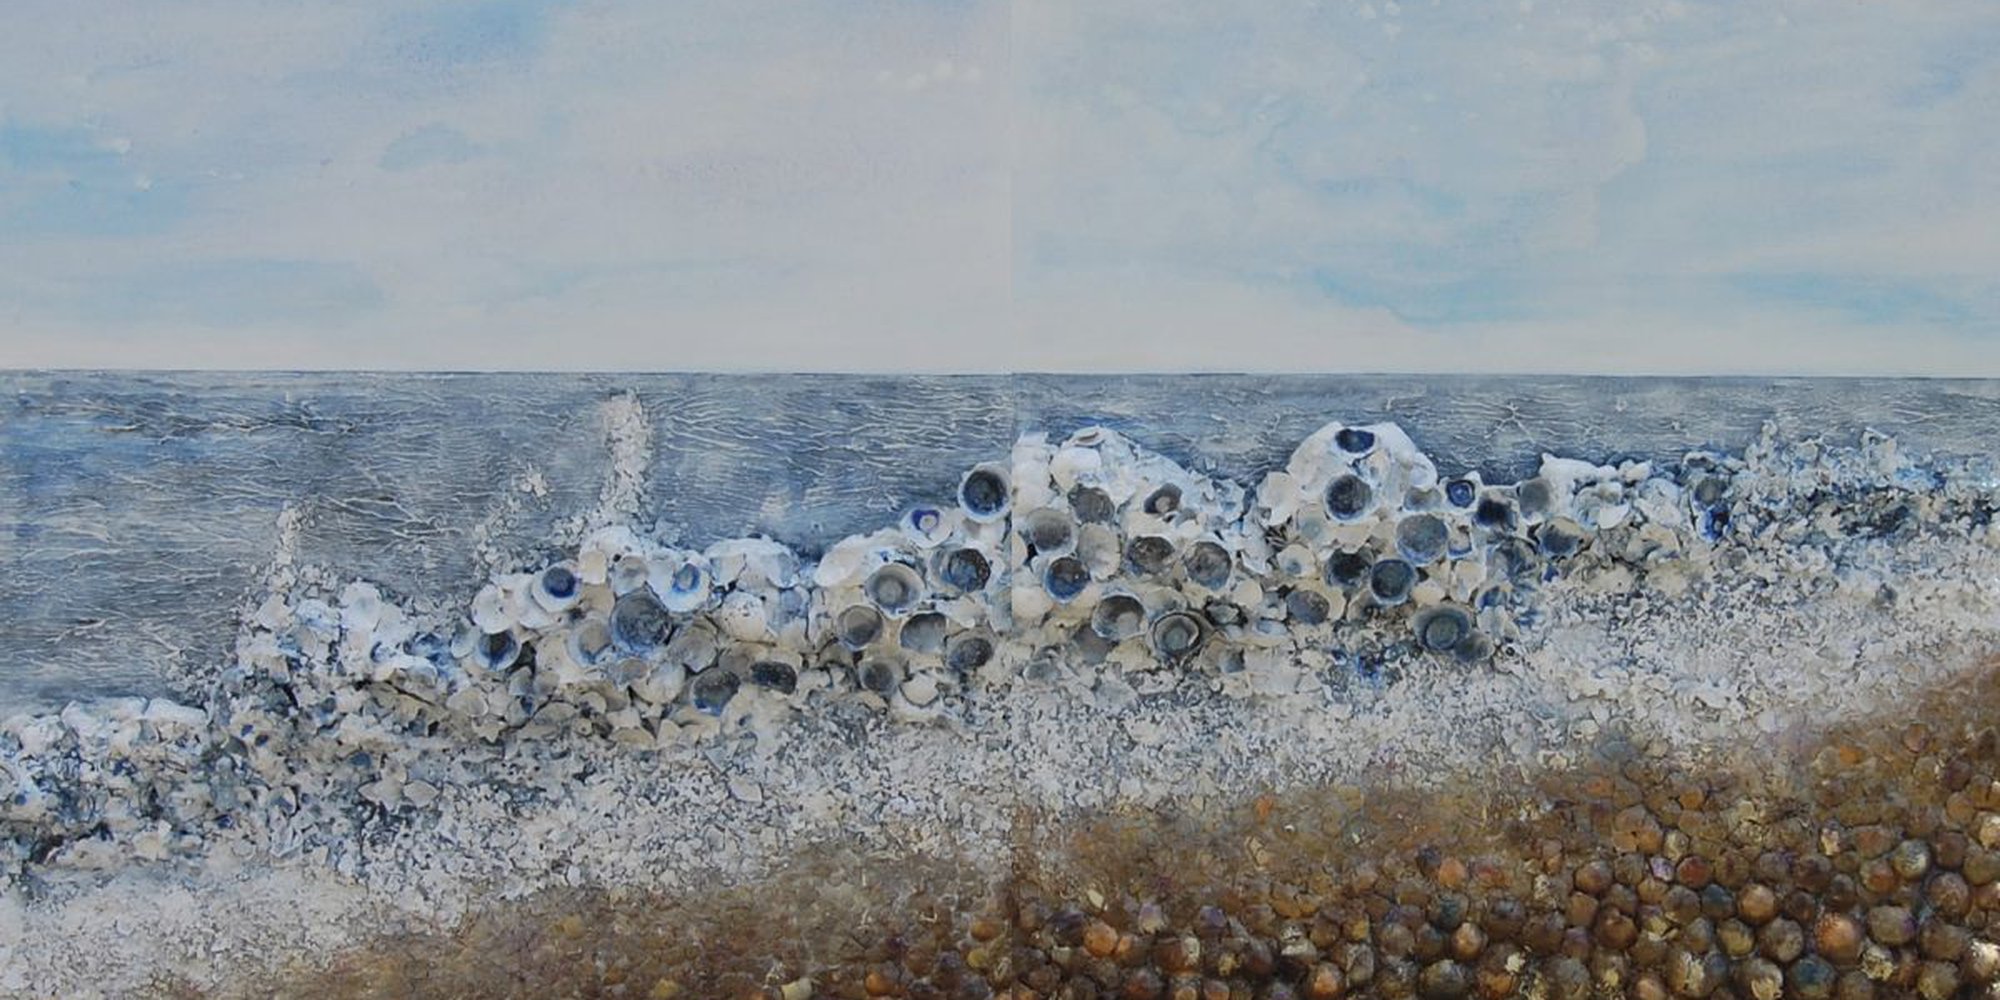 Art of the Day: "St. John's Beach ( diptych), 2012" by Rachel McCullock